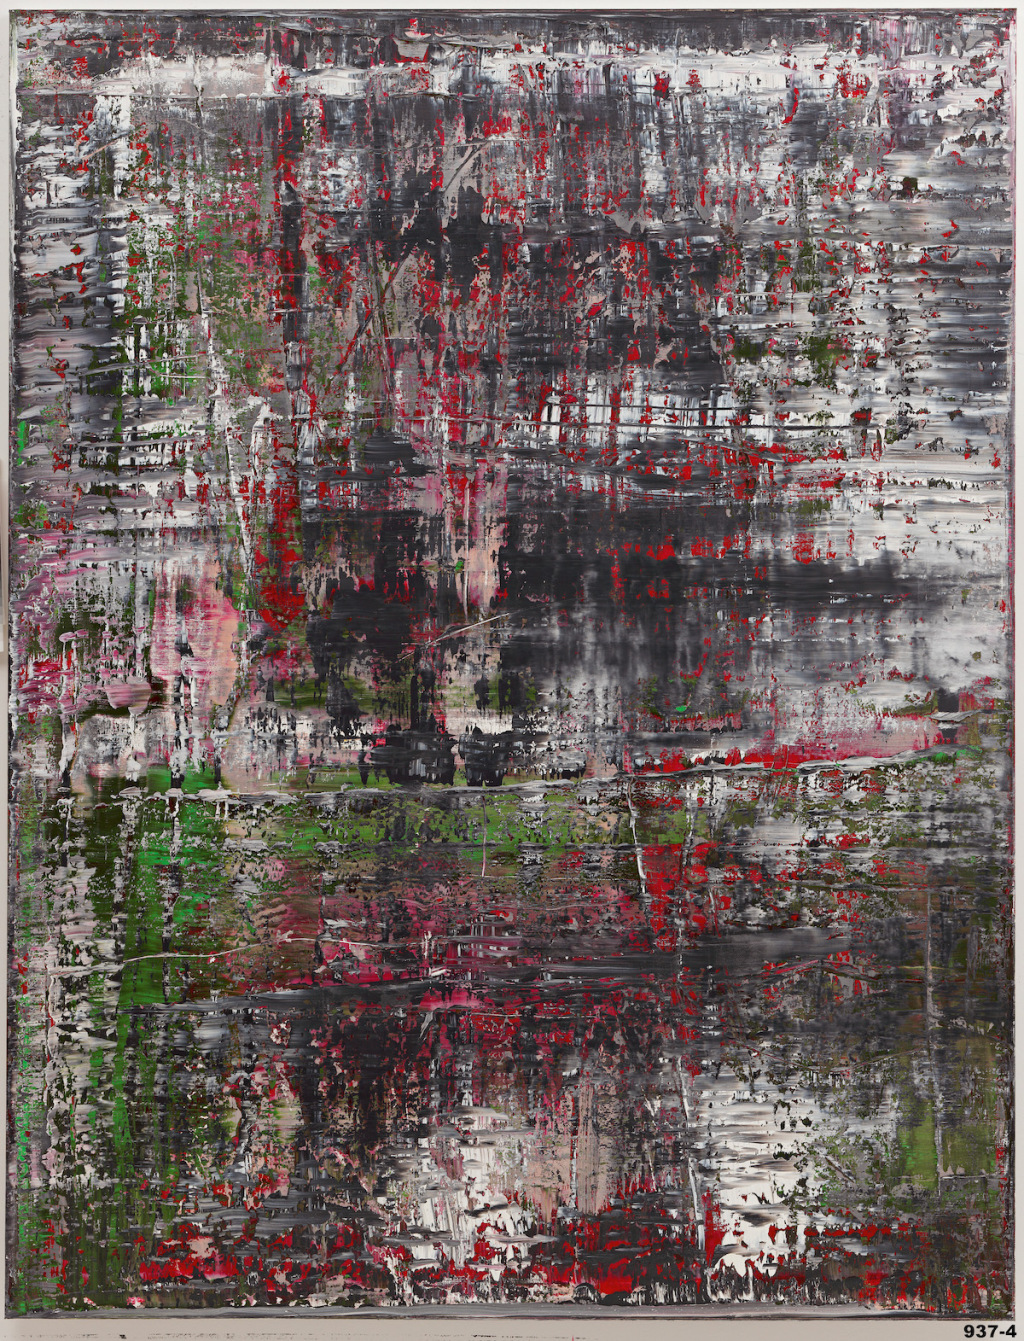 Gerhard Richter Permanently Loans 100 Works to Berlin Museum